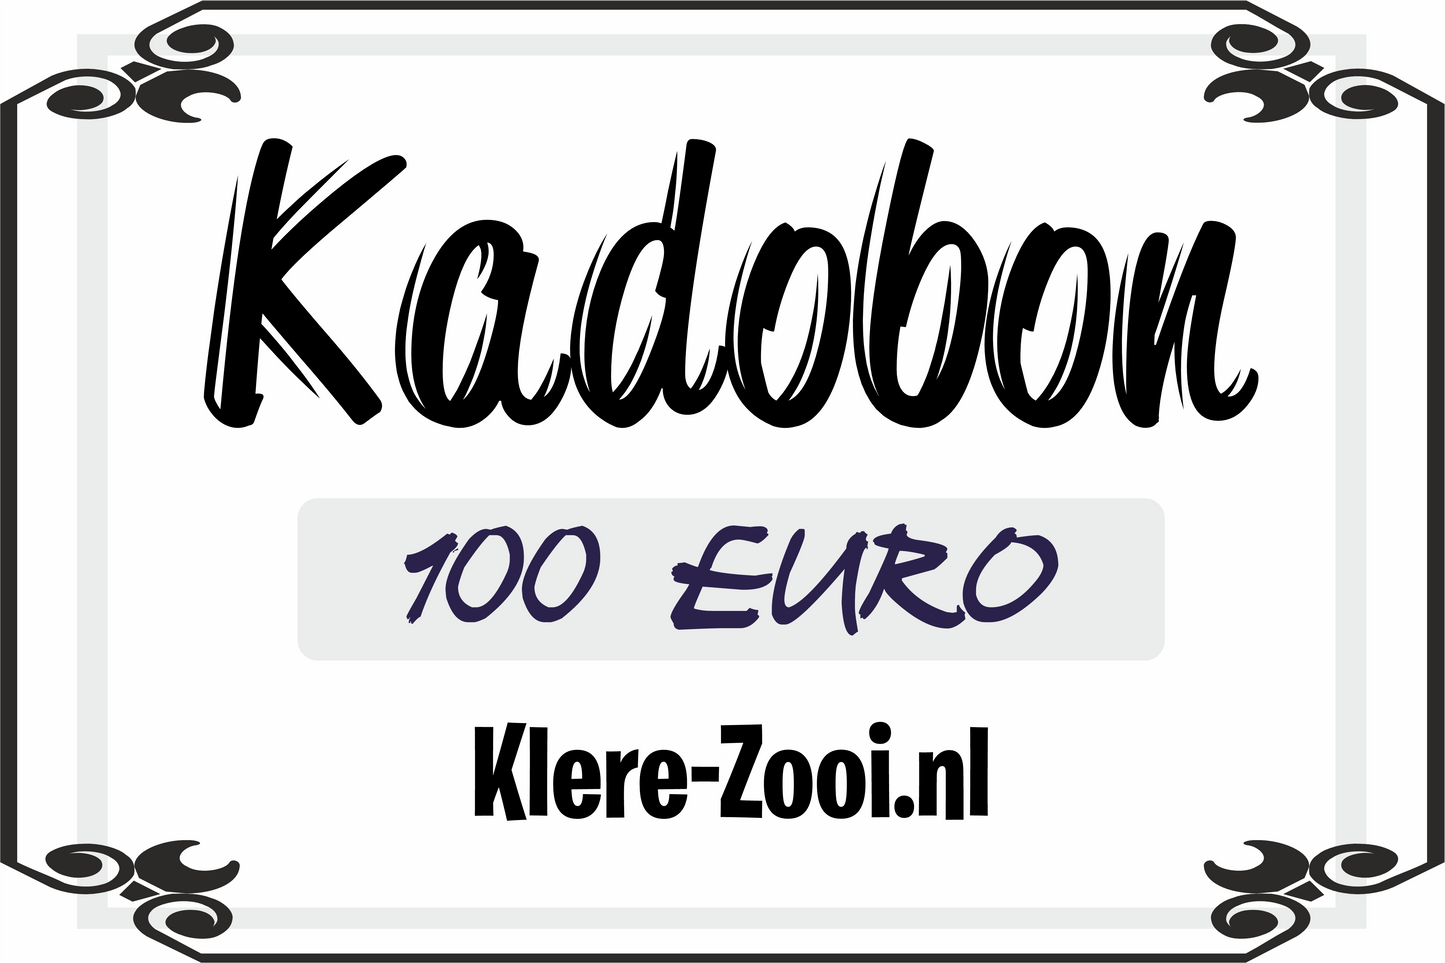 Klere-Zooi.nl Kadobon - € 100,00